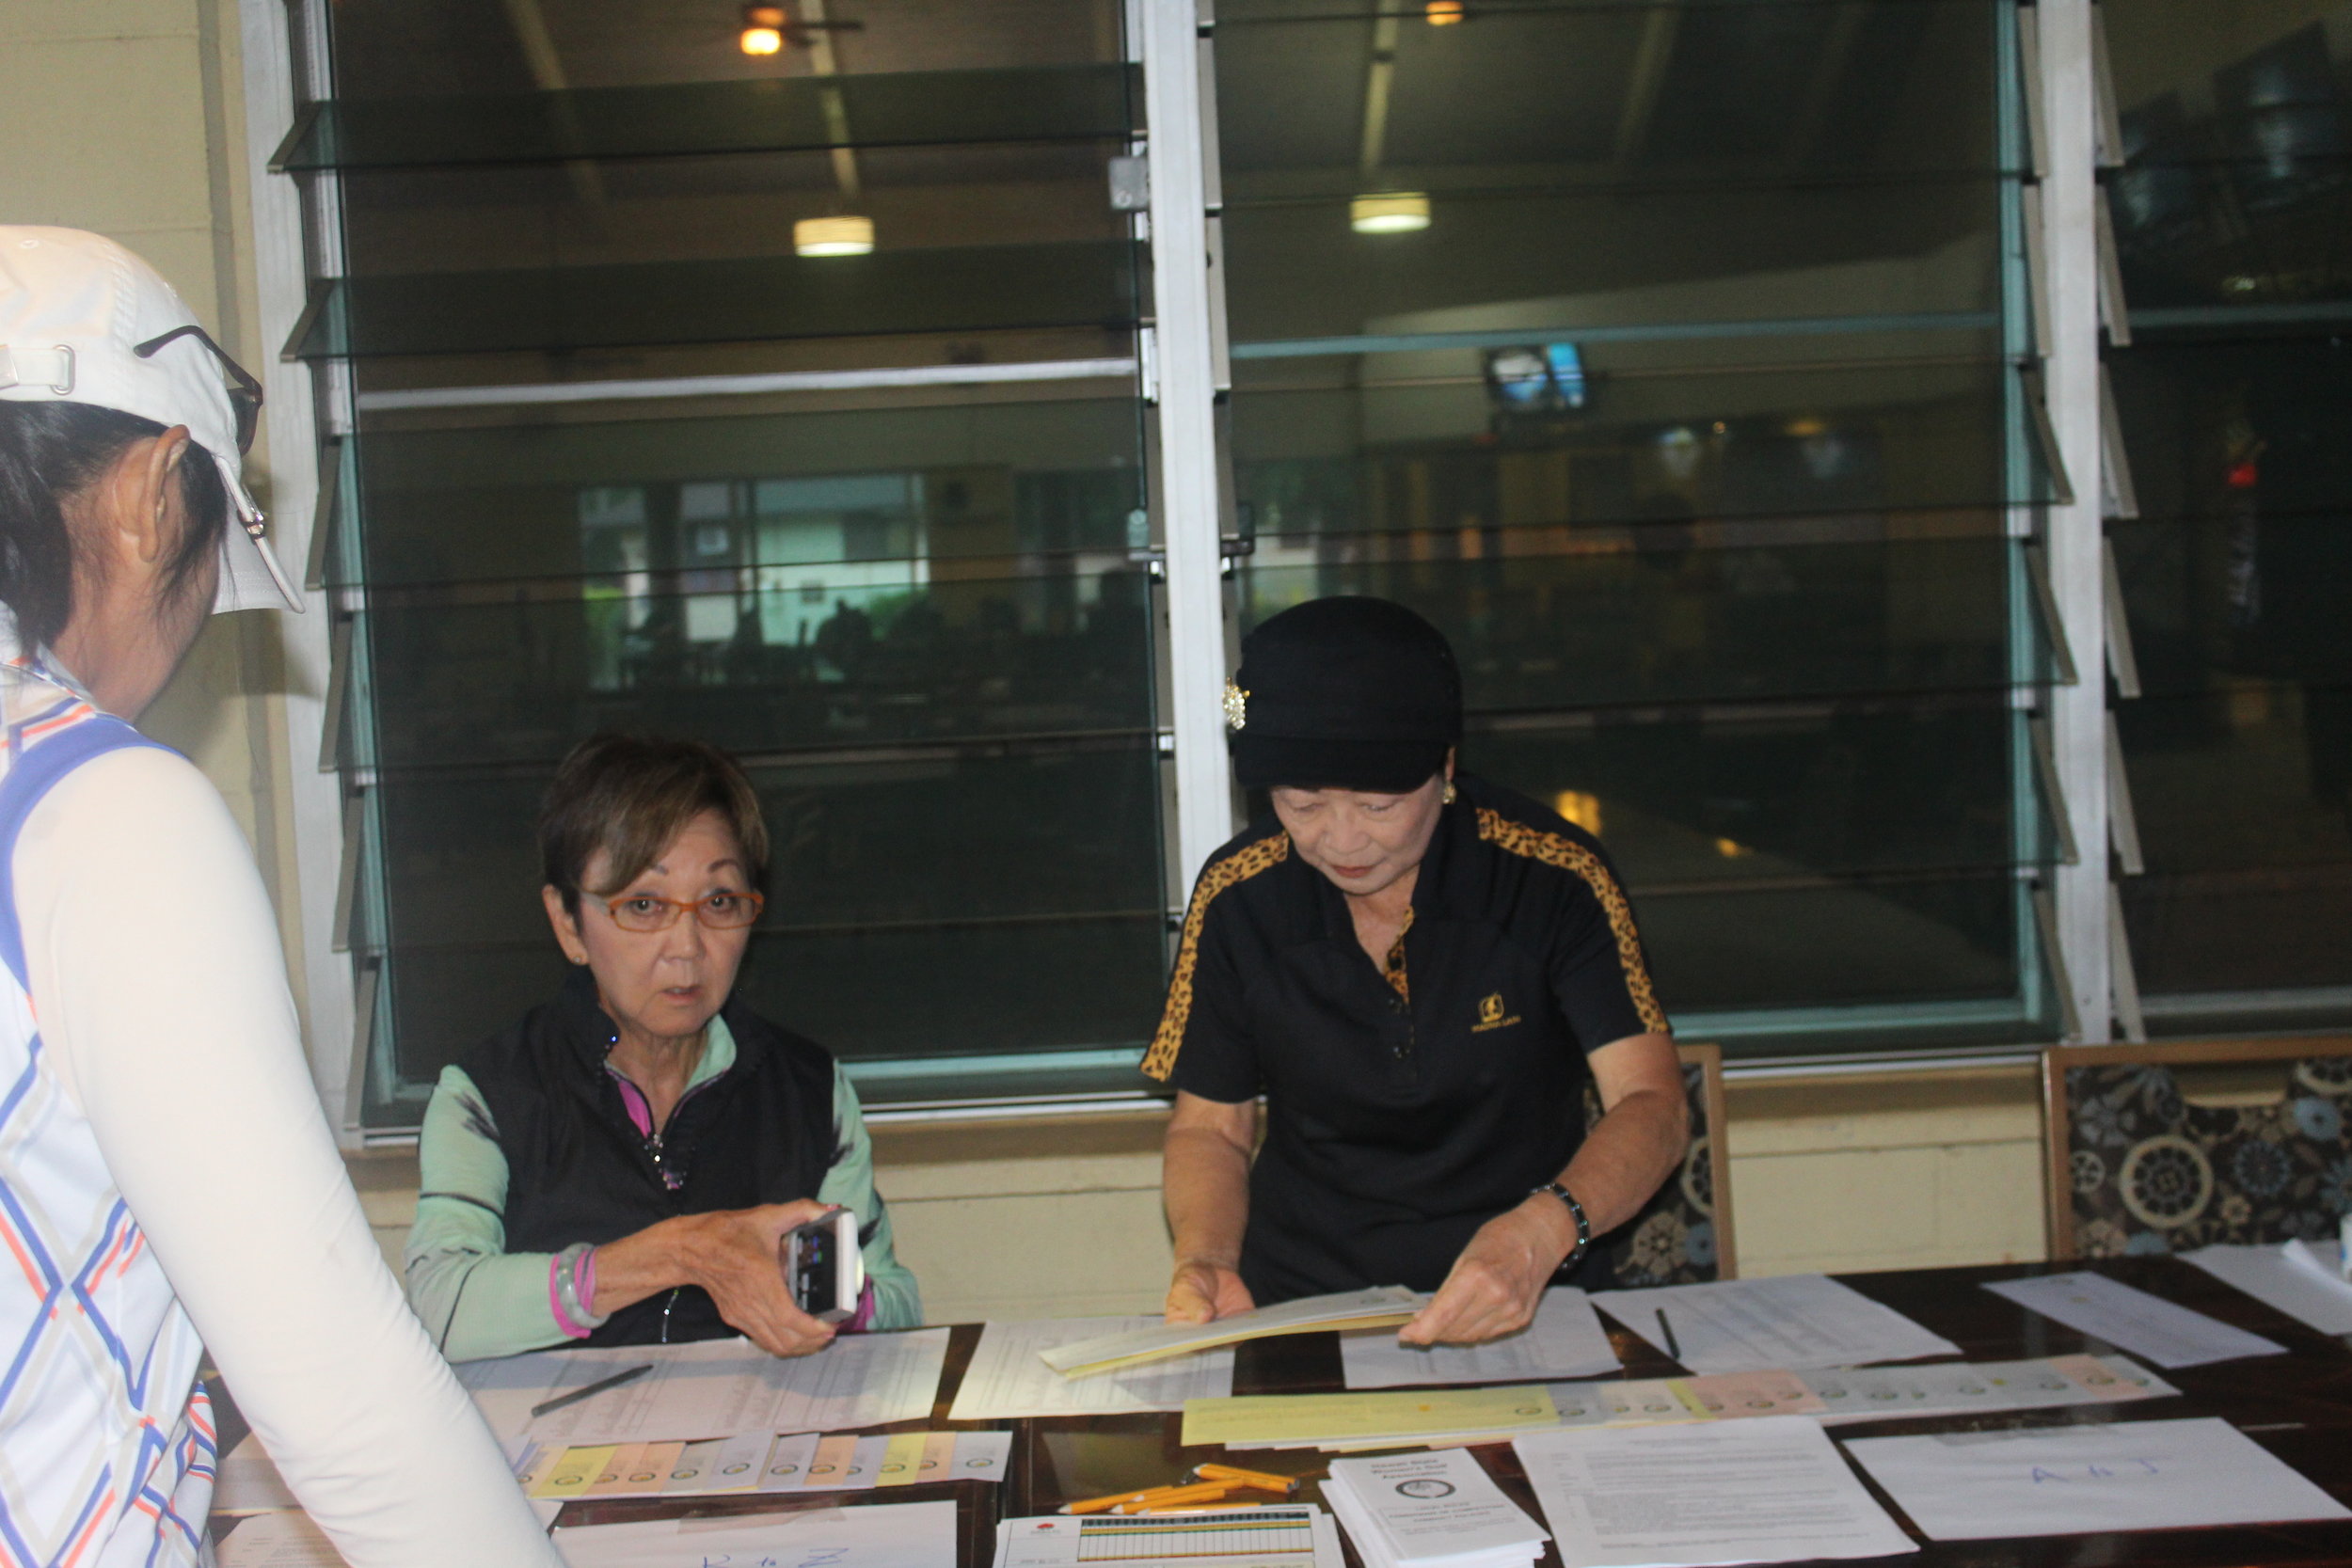  Registration desk with Diane Kawashima and Sheila Kim 